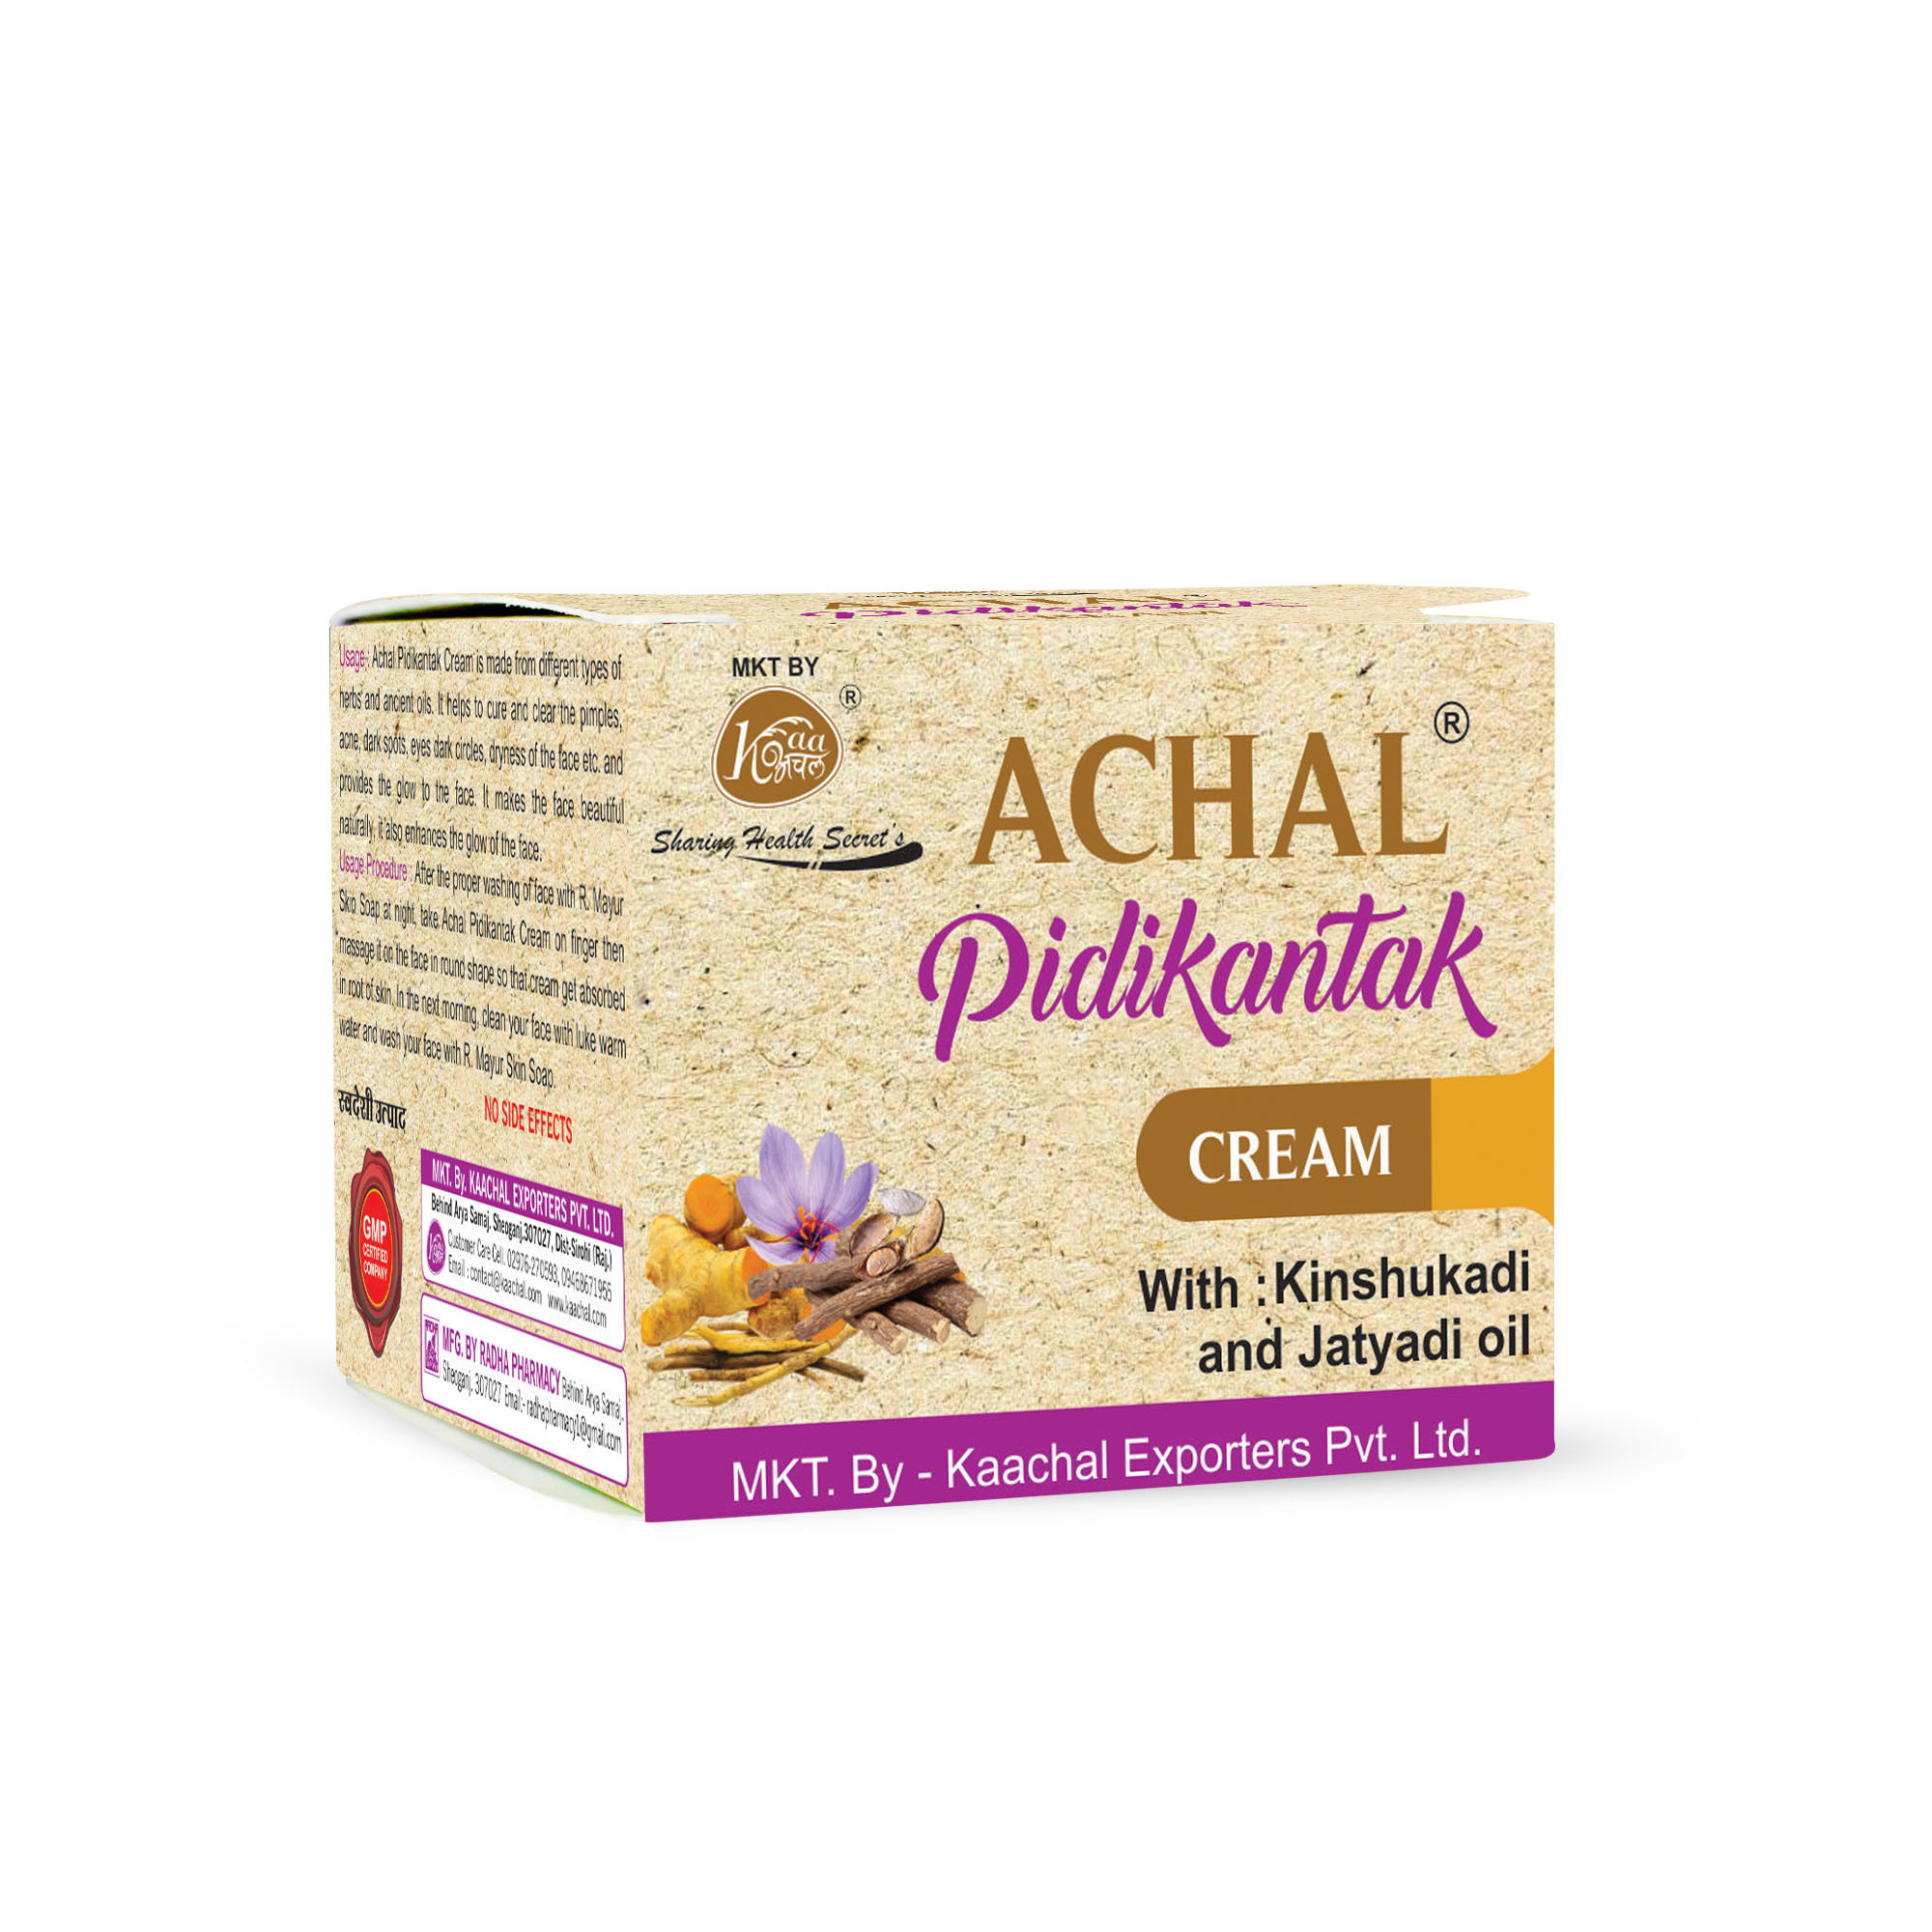 Achal Pidikantak Cream